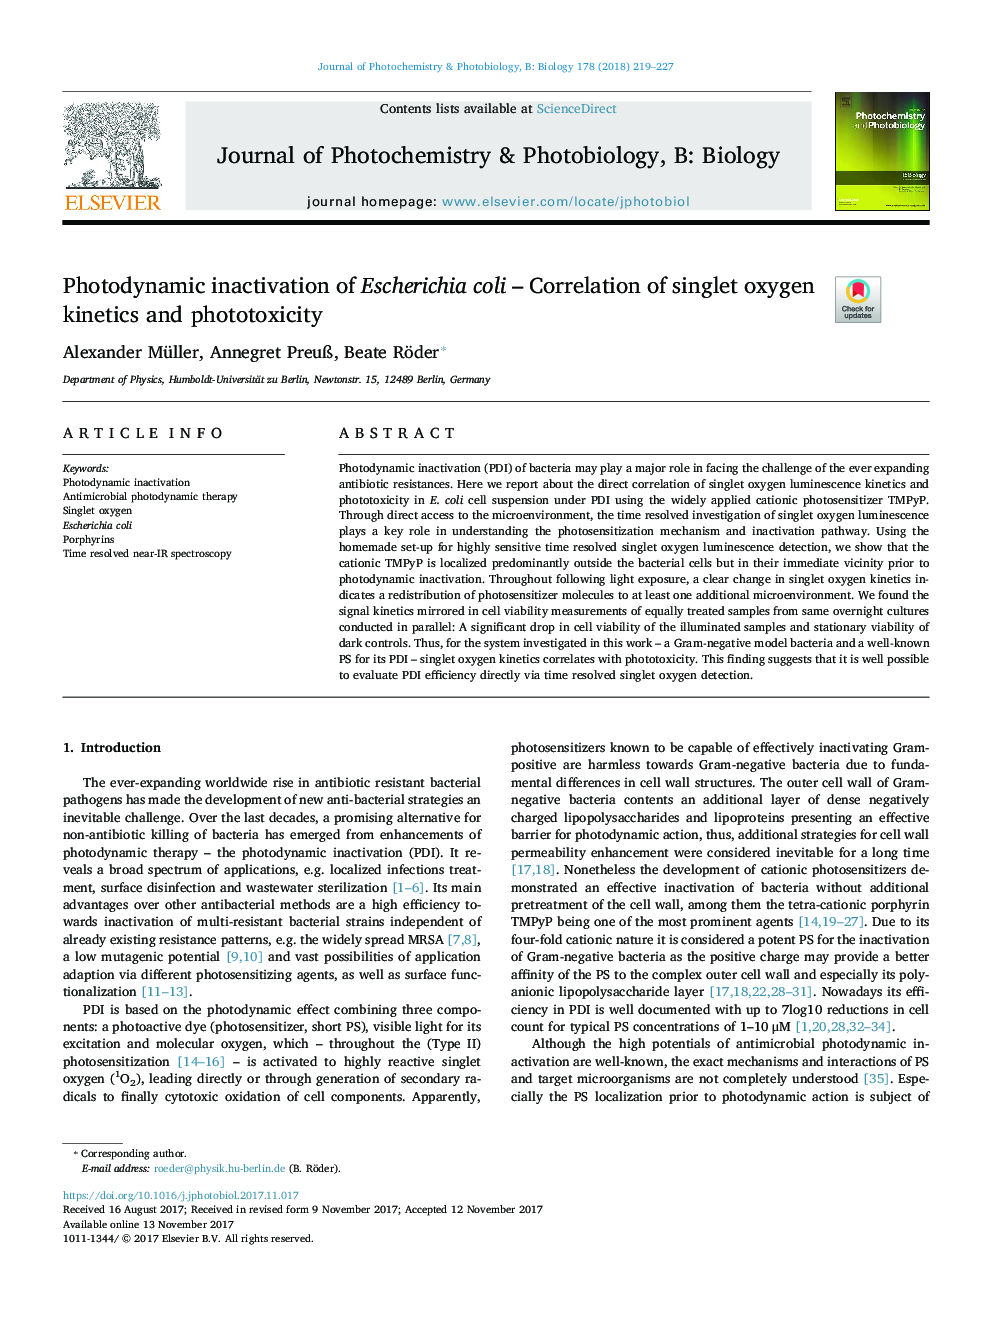 Photodynamic inactivation of Escherichia coli - Correlation of singlet oxygen kinetics and phototoxicity